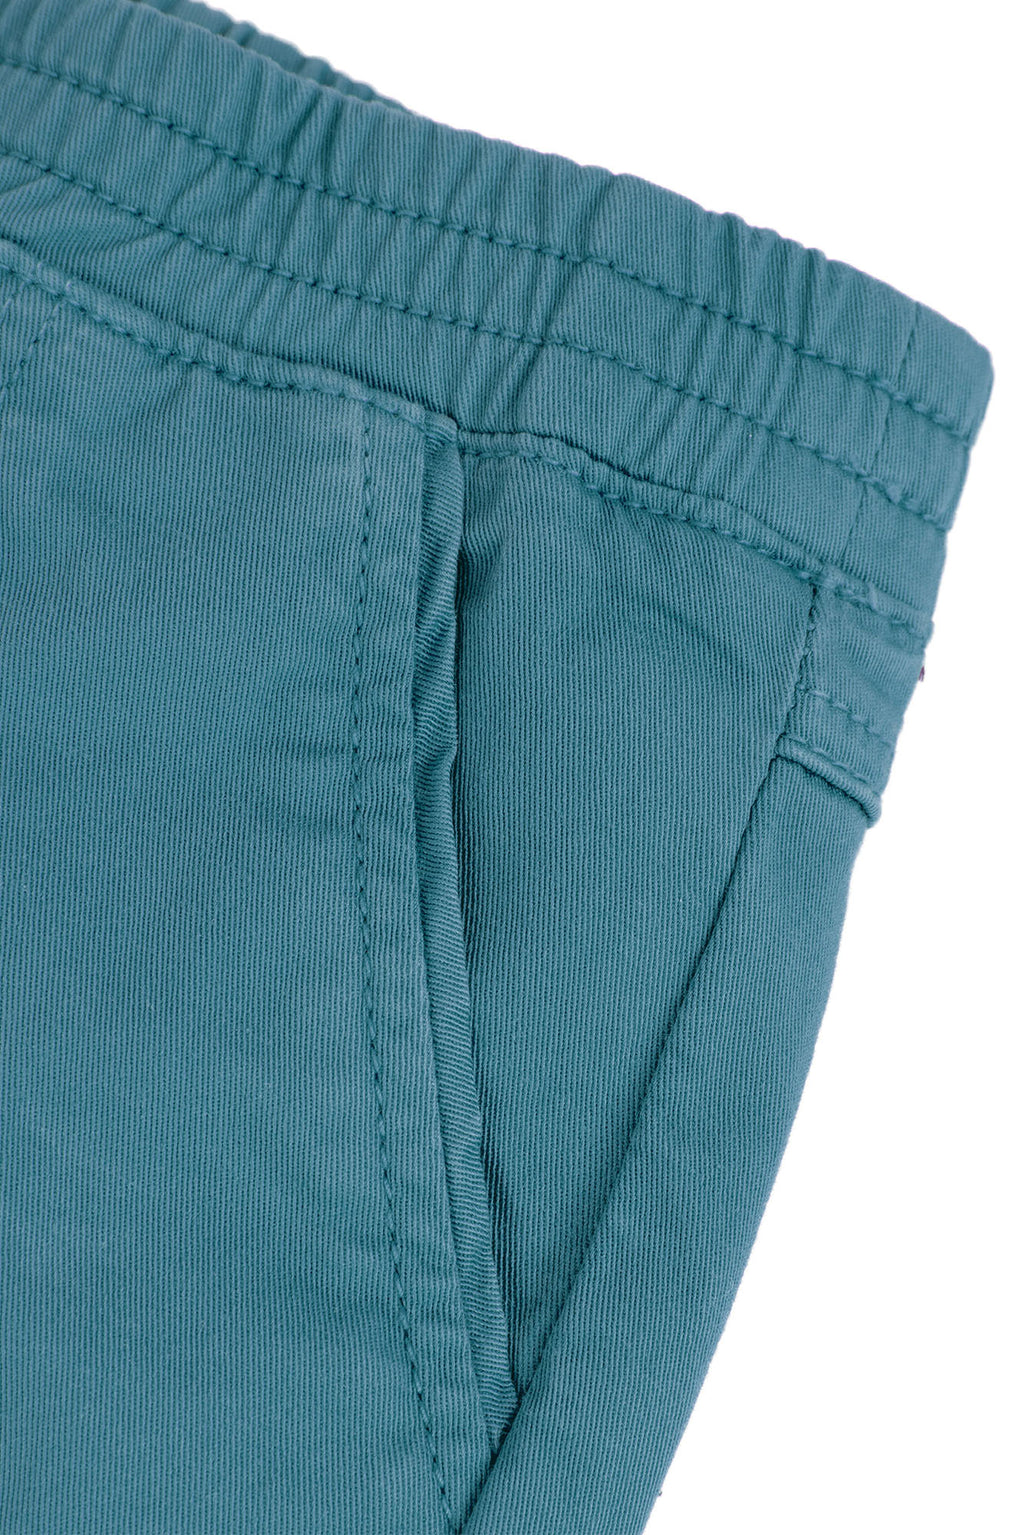 Pantaloni - Twill Verde anatra